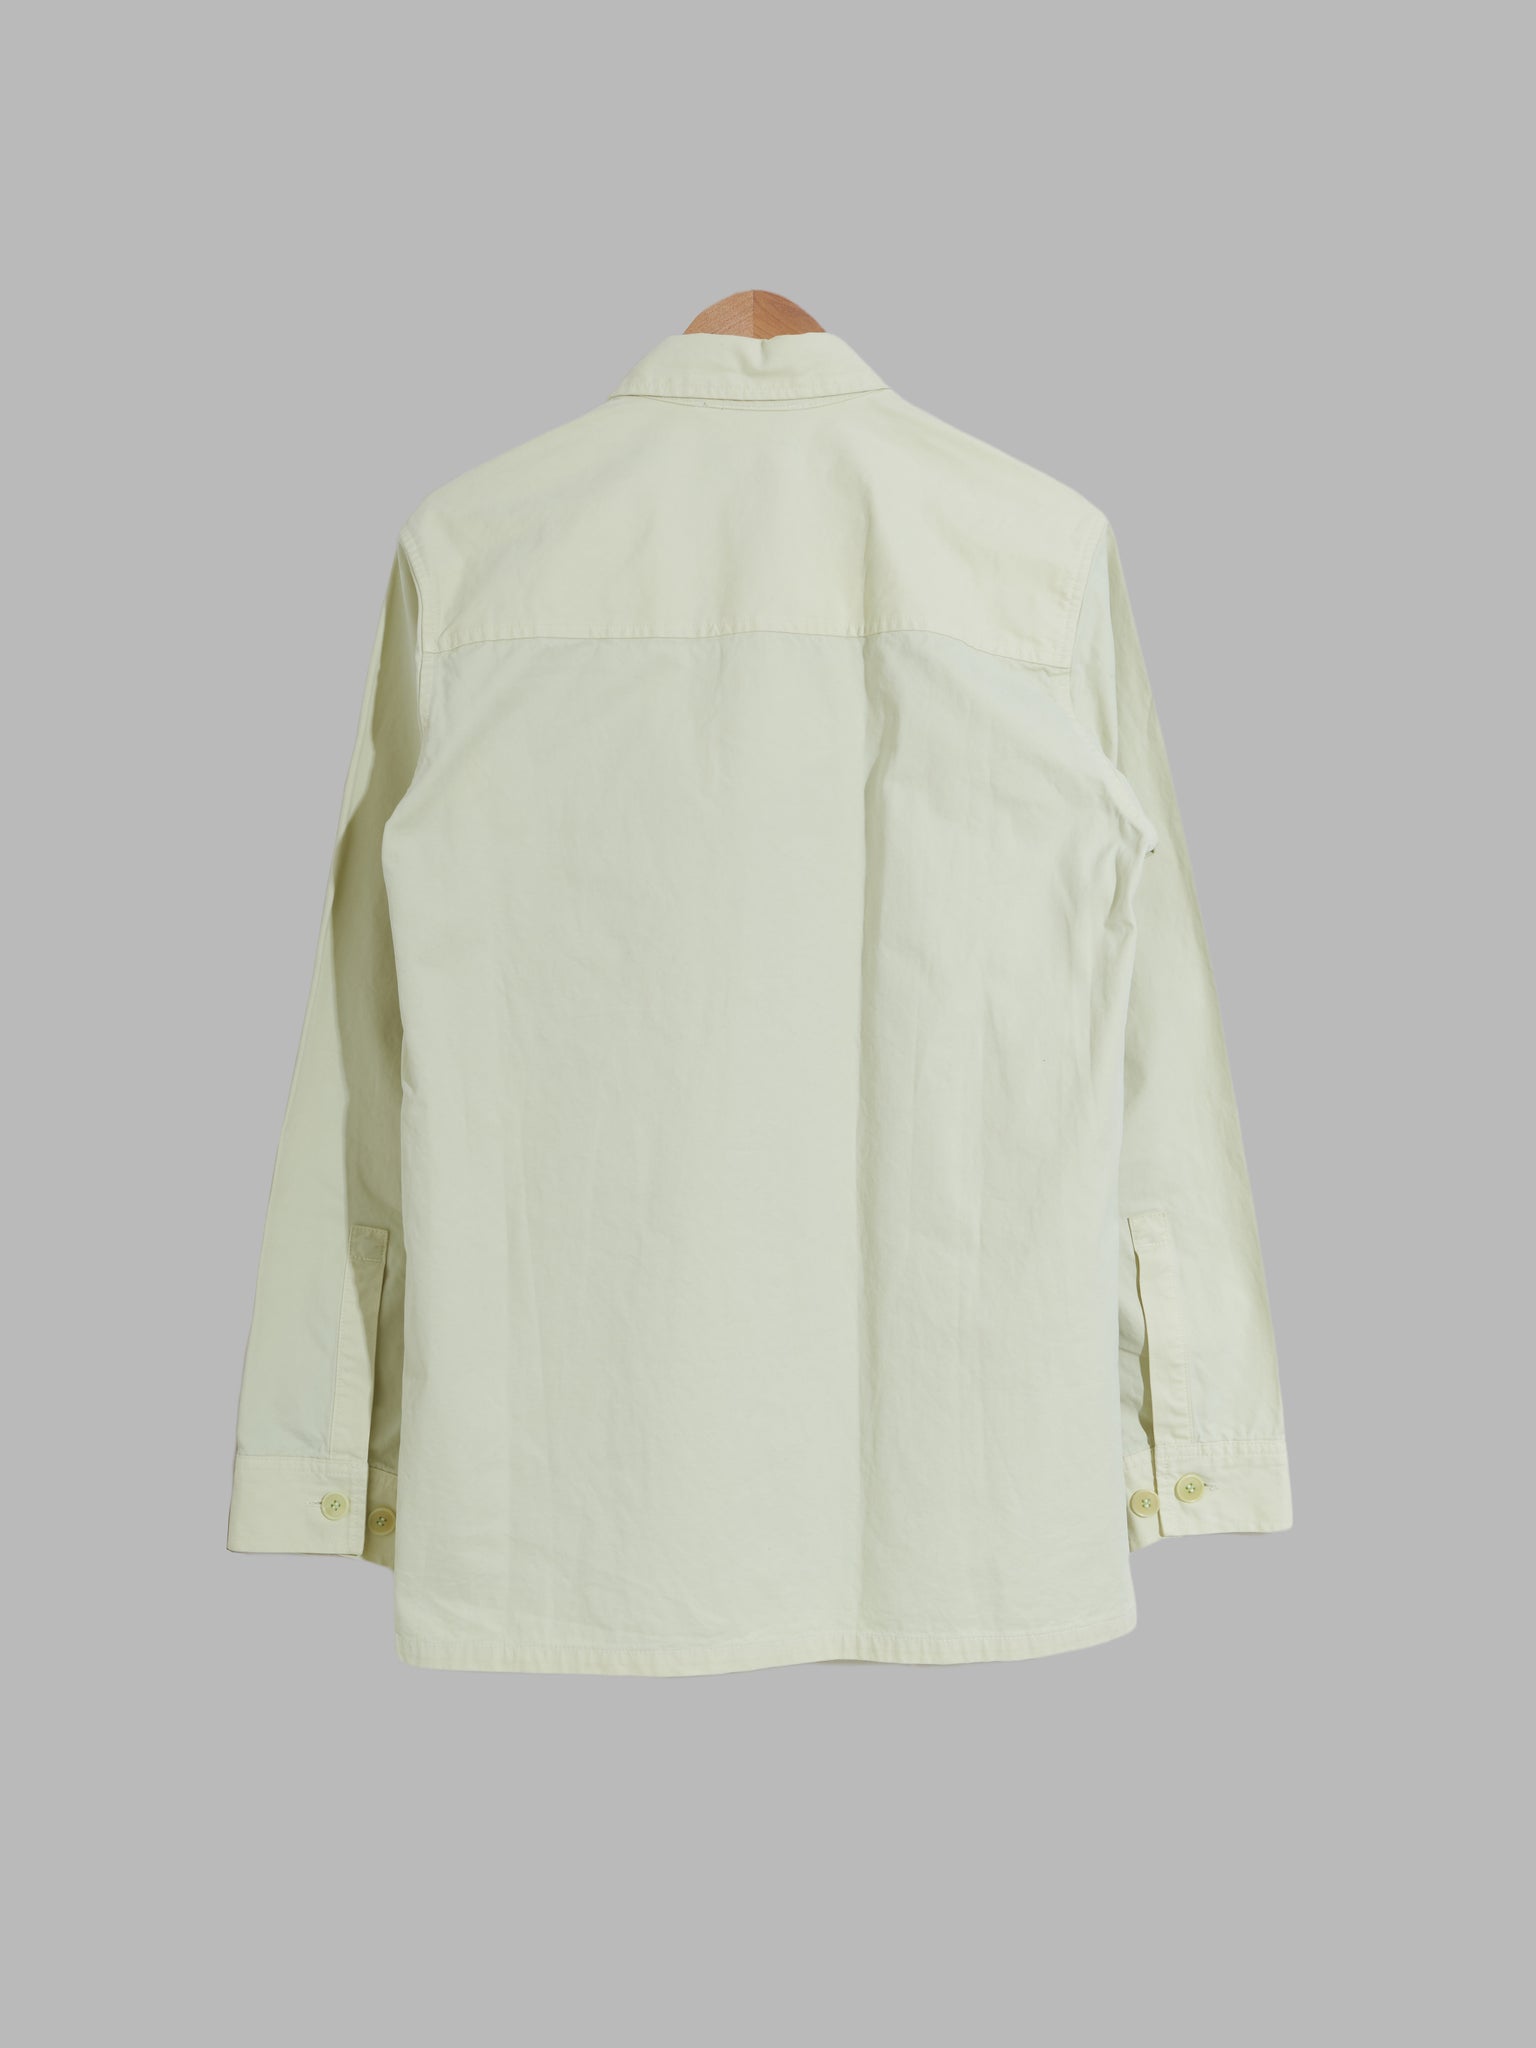 Margaret Howell light green cotton shirt jacket - L M